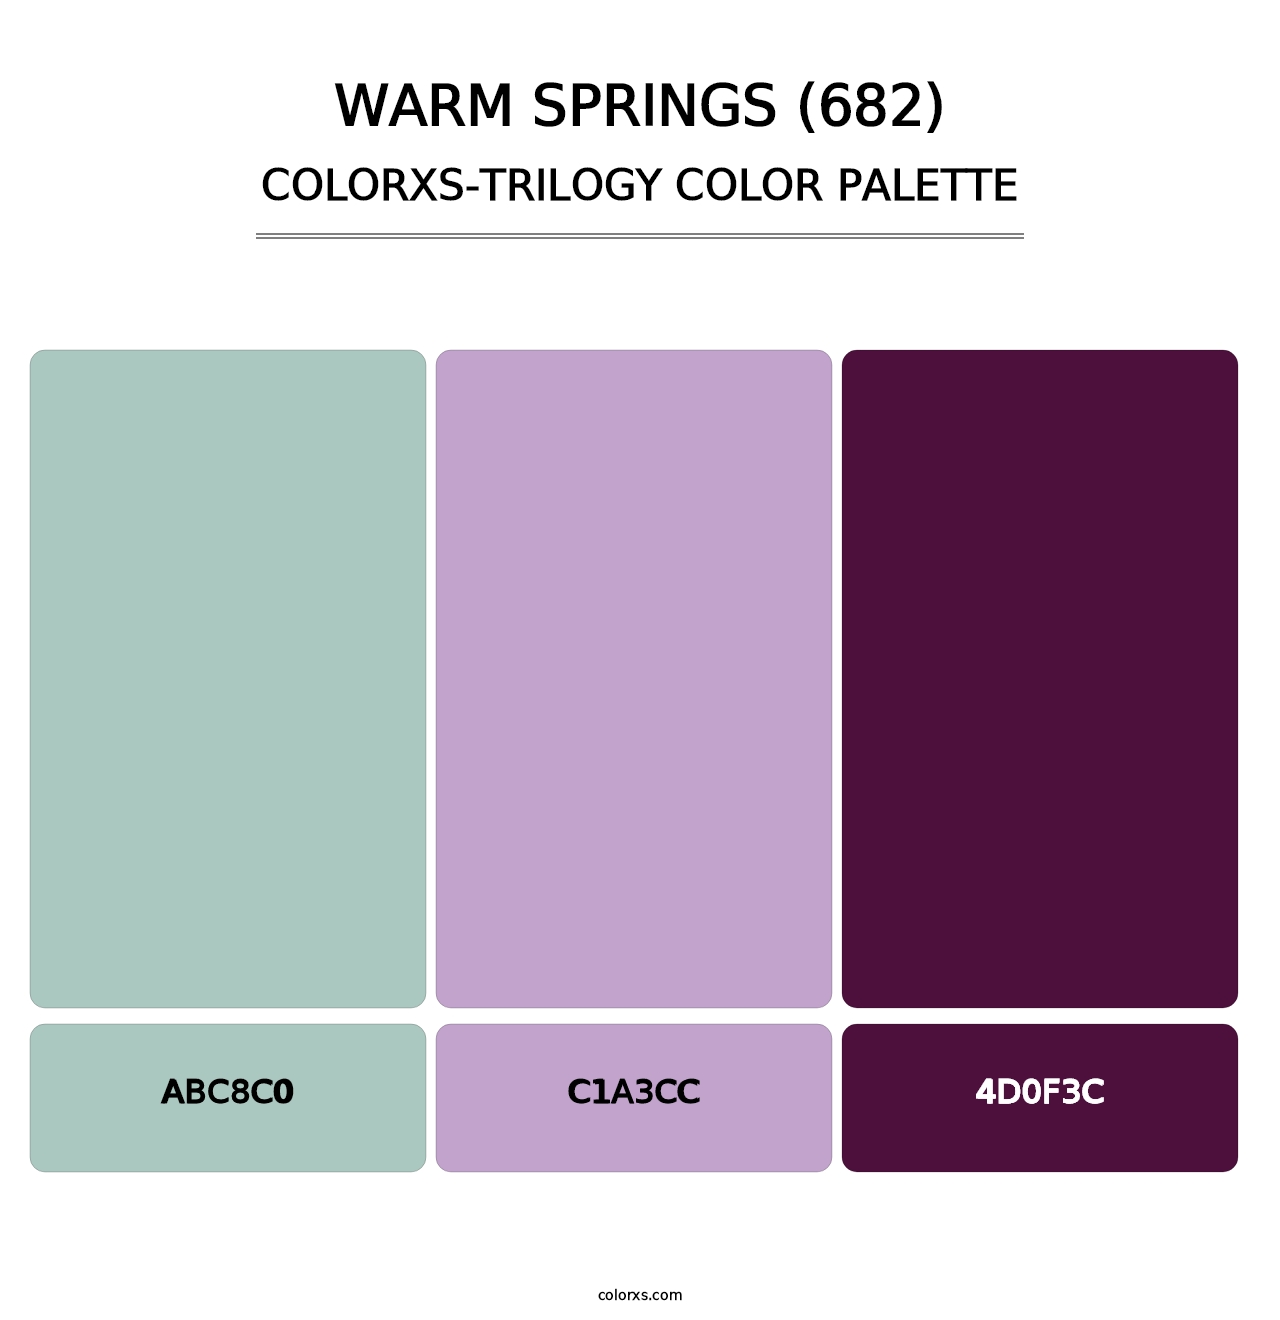 Warm Springs (682) - Colorxs Trilogy Palette